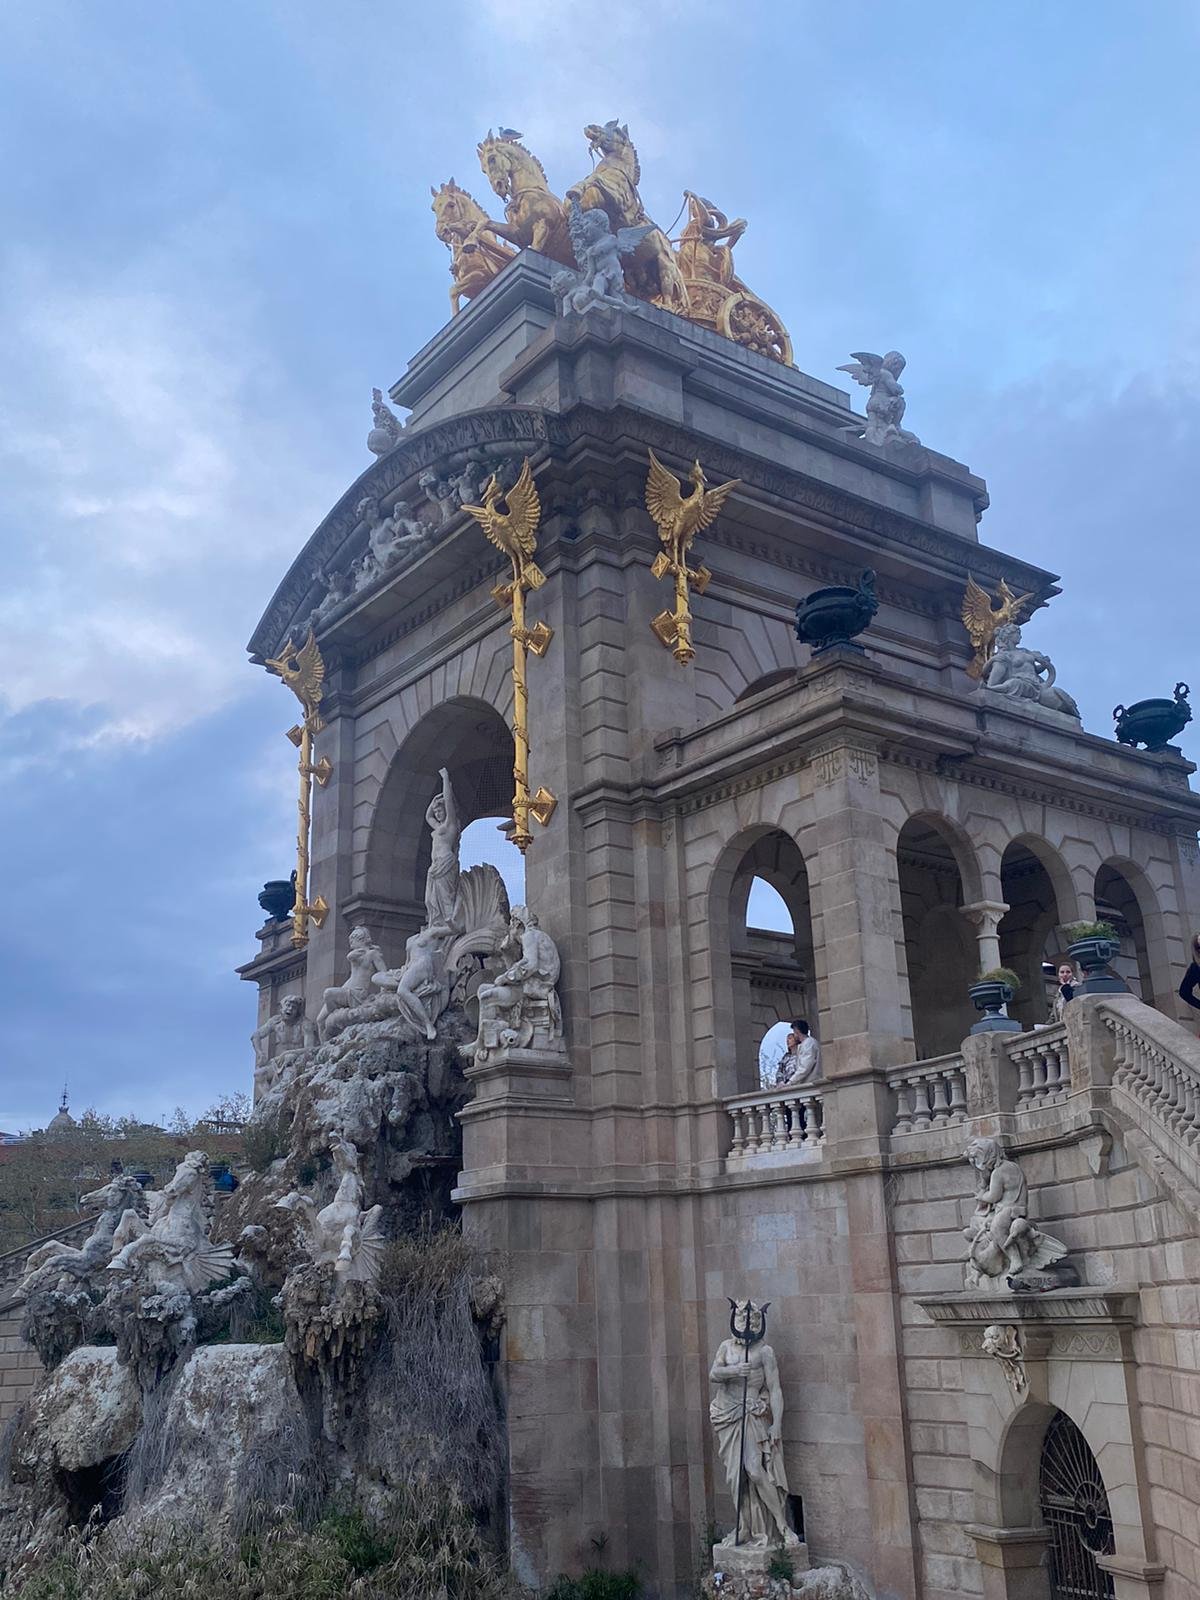 La majestueuse fontaine du parc de la Ciutadella